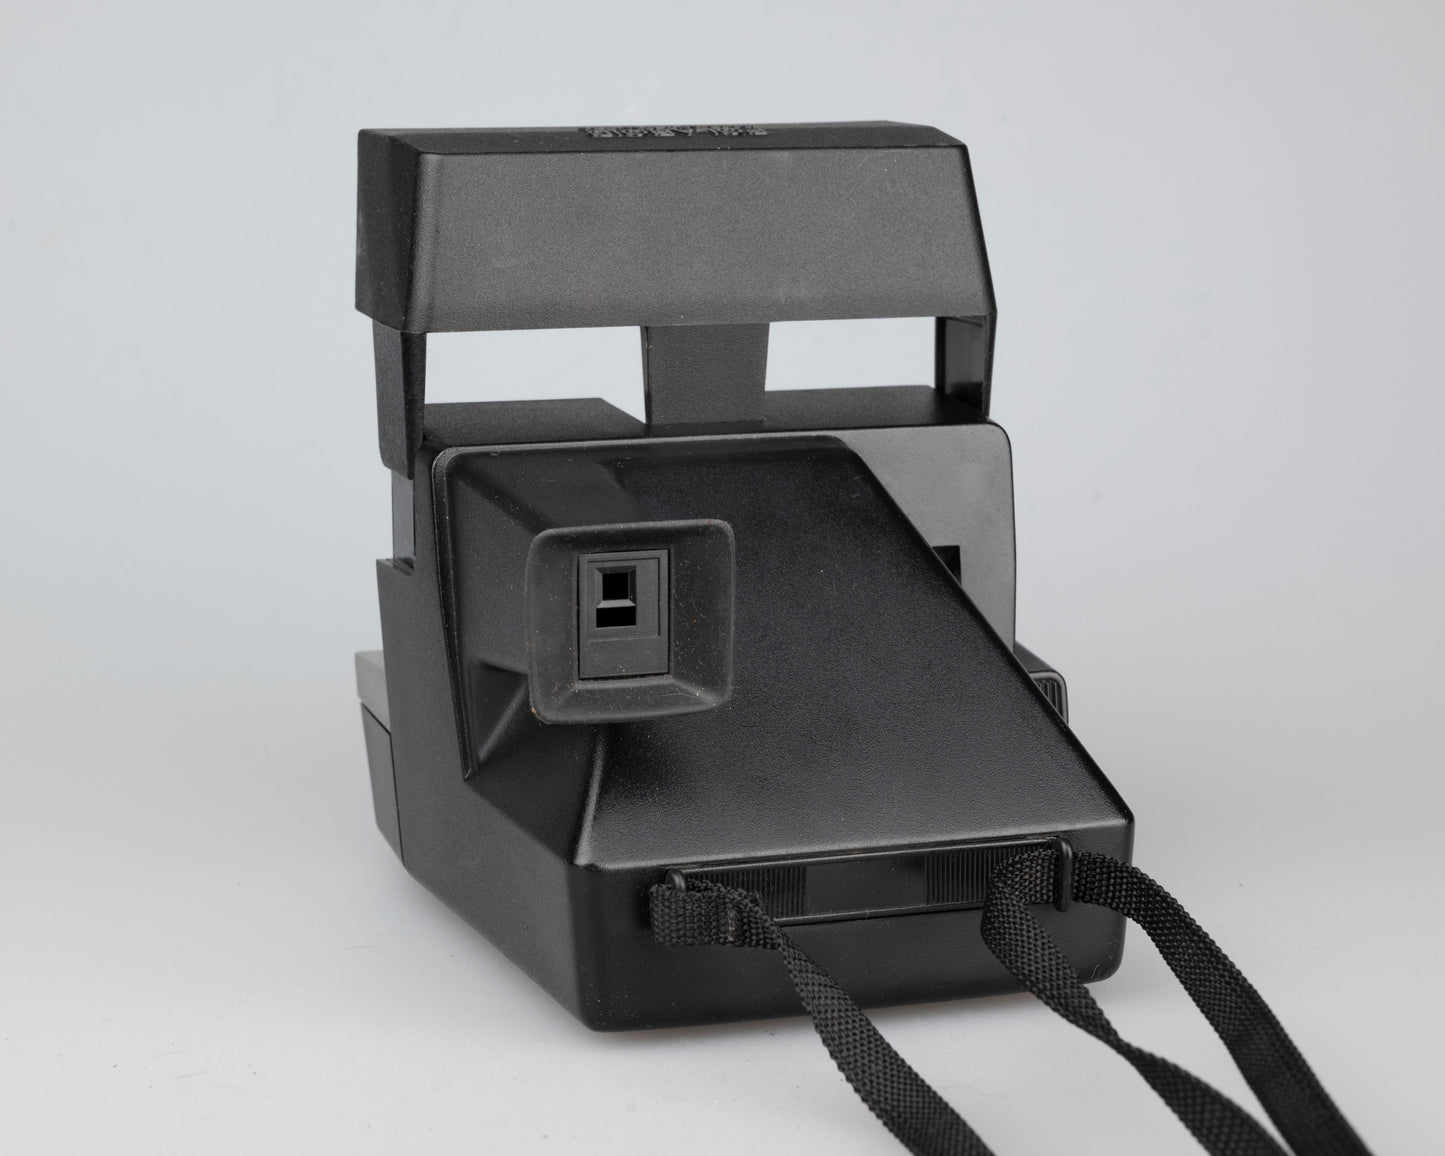 Polaroid Sun 600 LMS instant film camera (serial K3Q39243NA)